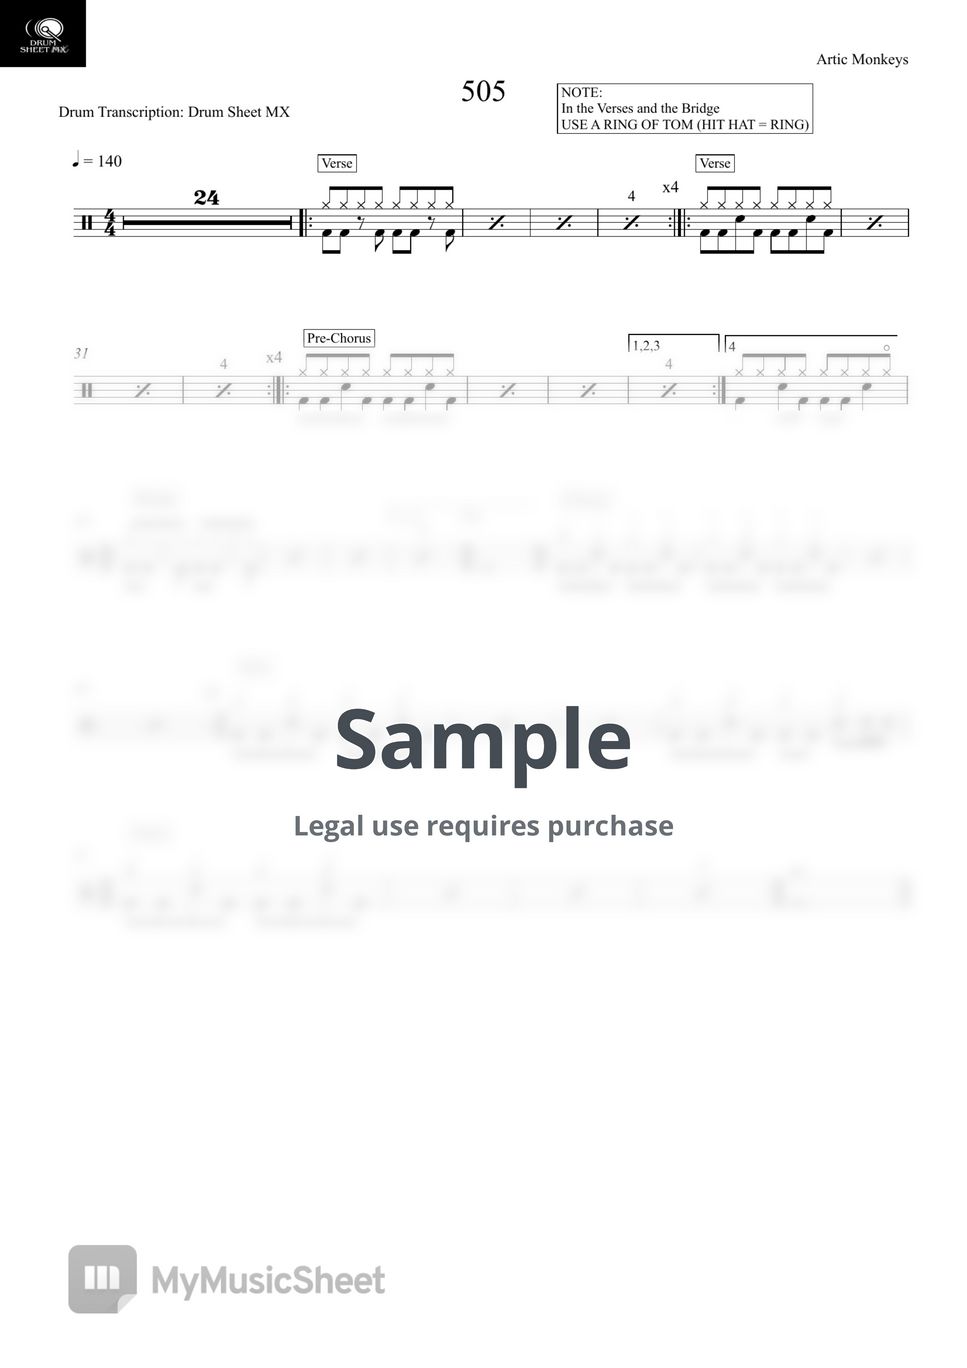 Artic Monkeys - 505 Sheets by Drum Transcription: Drum Sheet MX